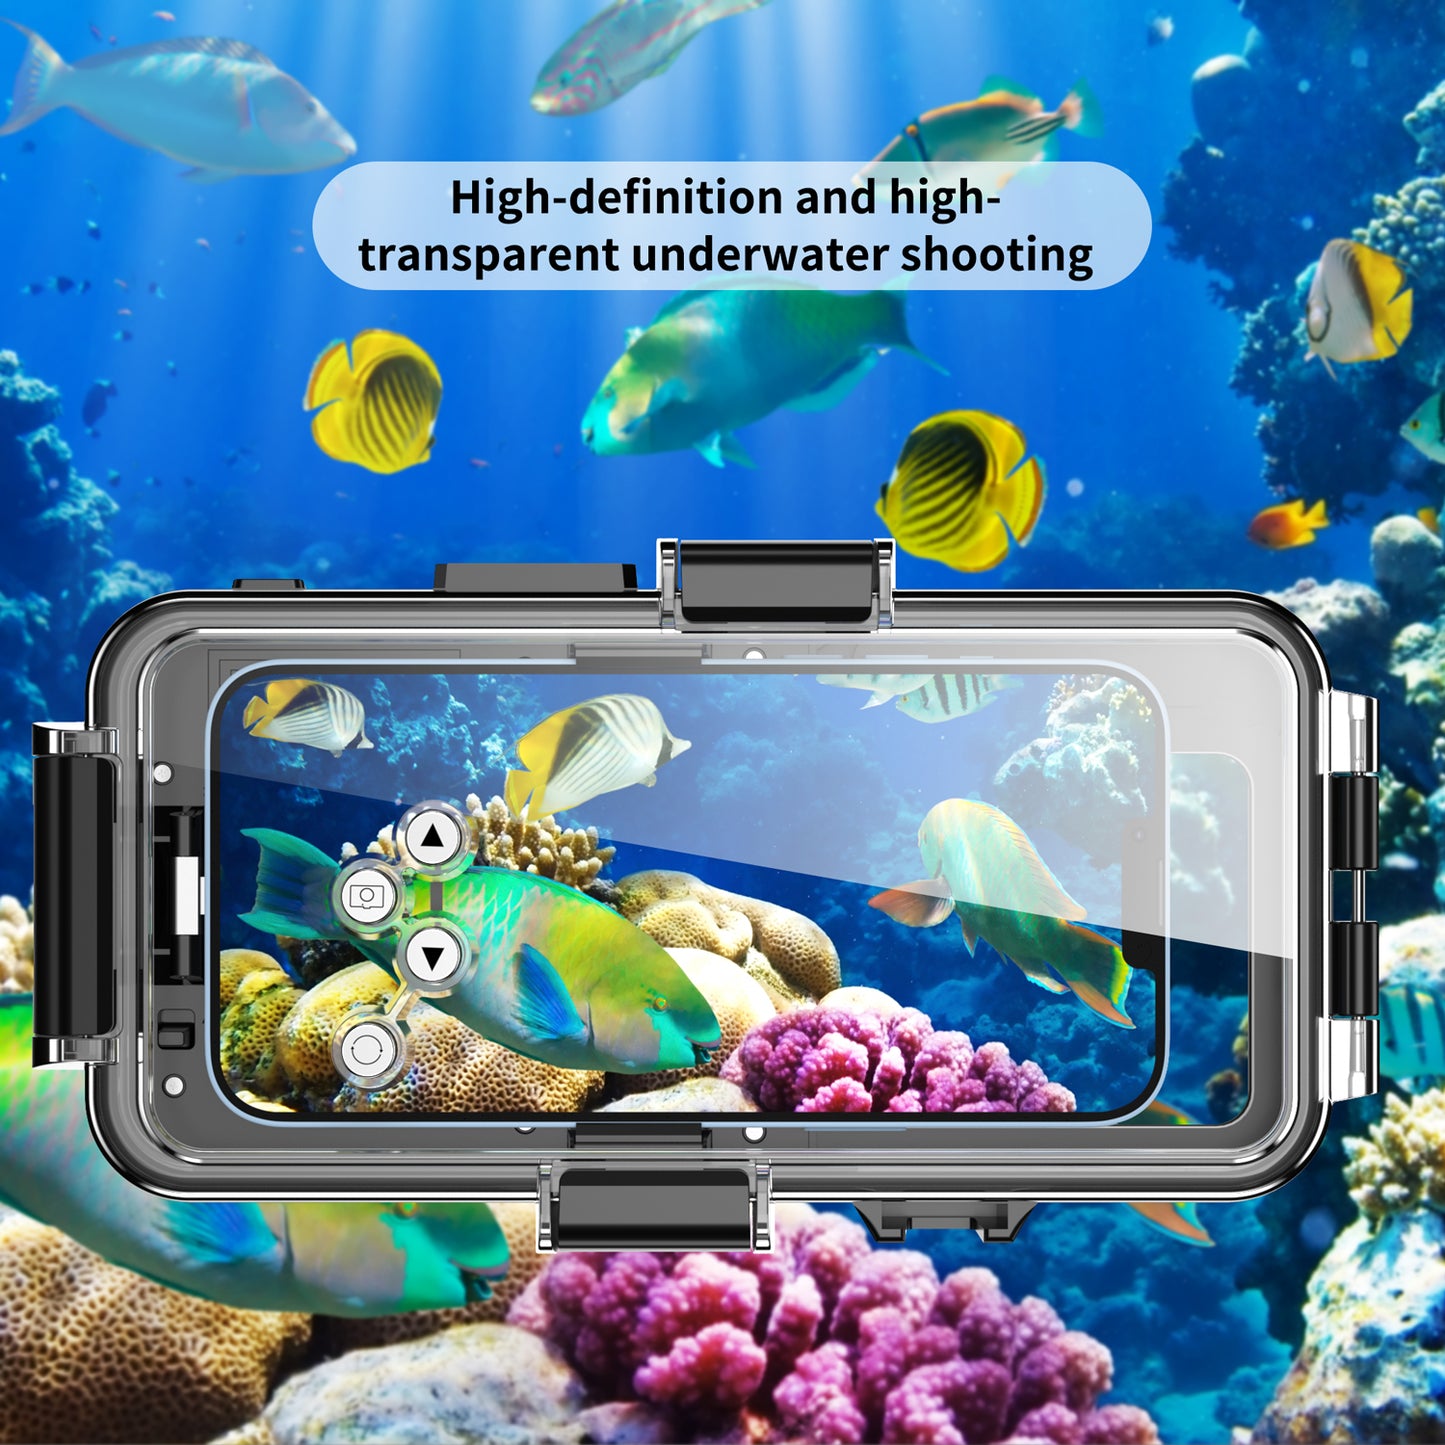 Apple iPhone 11 Pro Max Case Waterproof Under Sea 30 Meters Profession Diving Take Photoes Videos